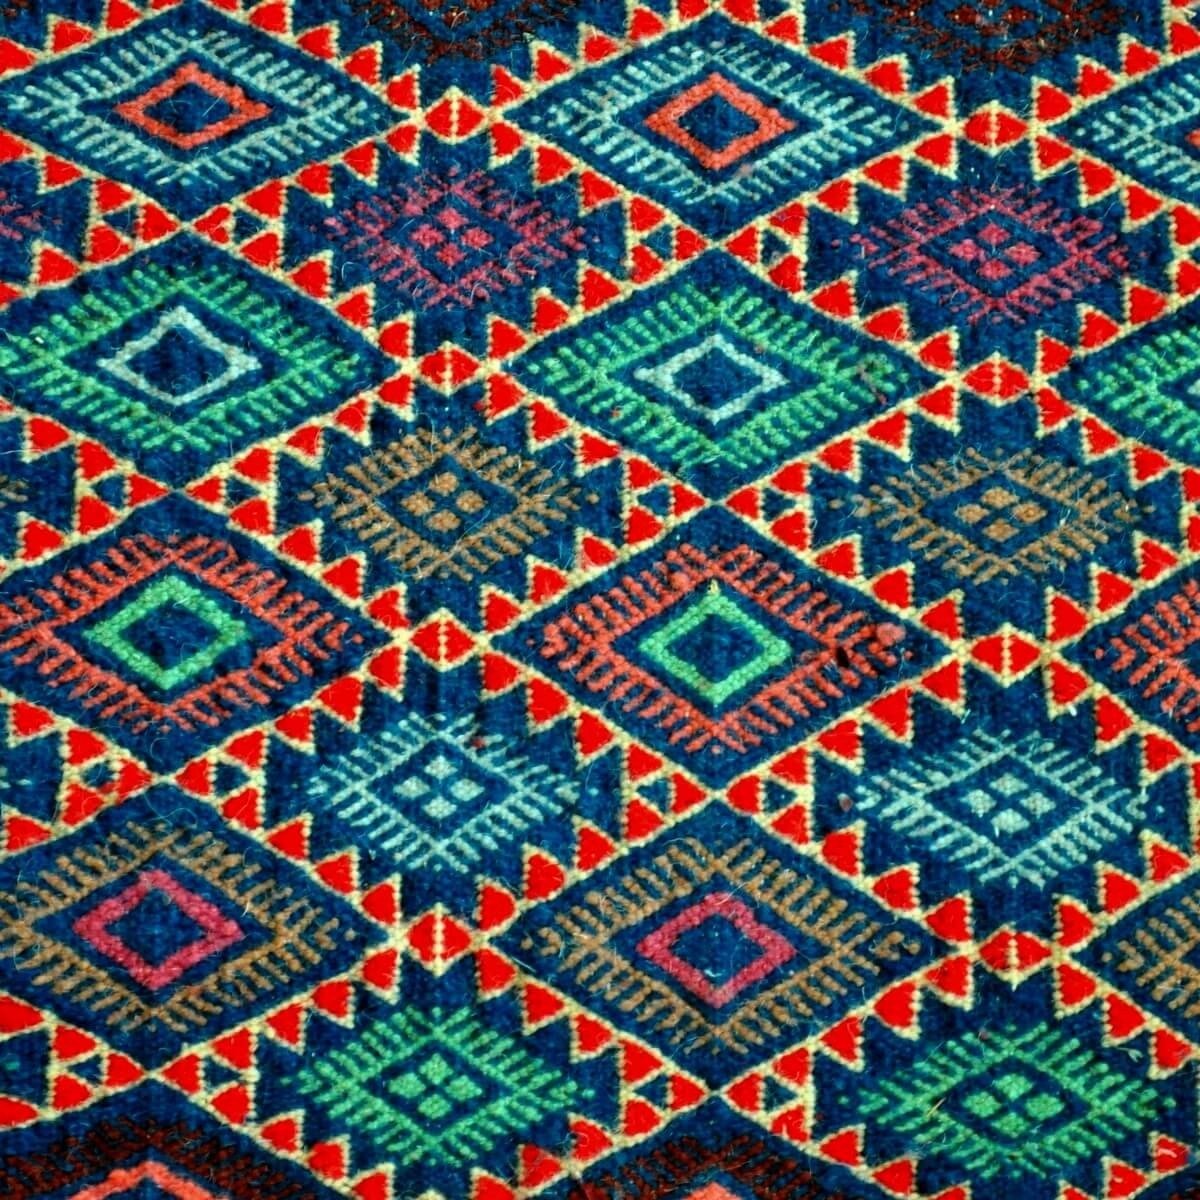 Berber tapijt Tapijt Kilim Nassim 120x195 Blauw/Rood/Groen (Handgeweven, Wol, Tunesië) Tunesisch kilimdeken, Marokkaanse stijl. 